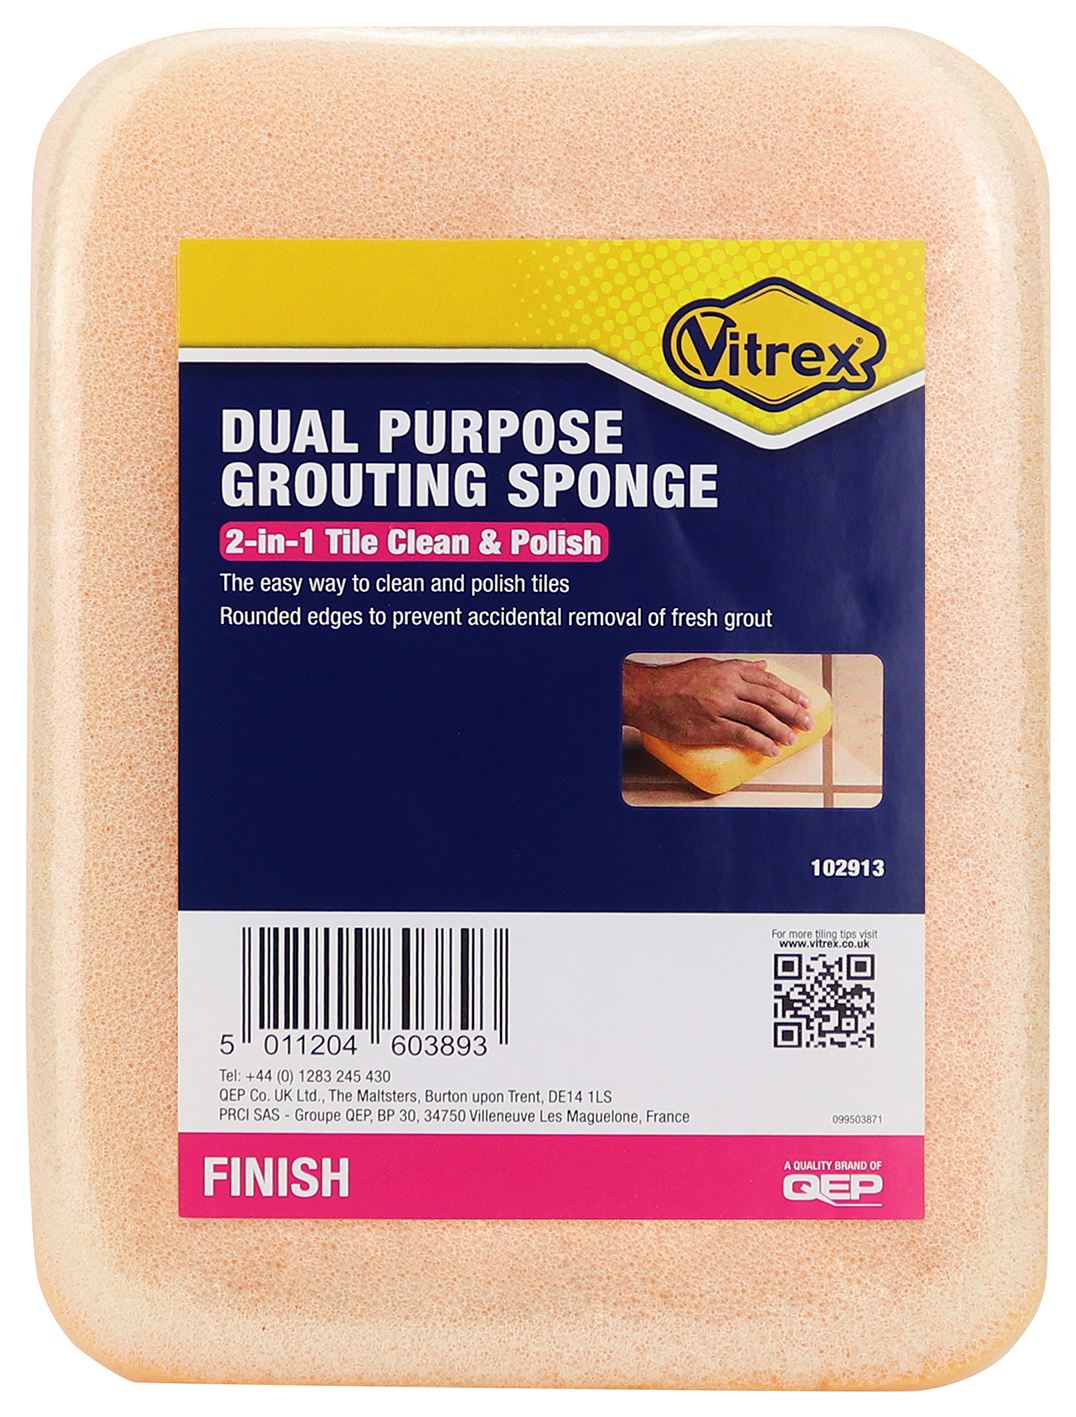 Image of Vitrex Dual Purpose Grouting Sponge